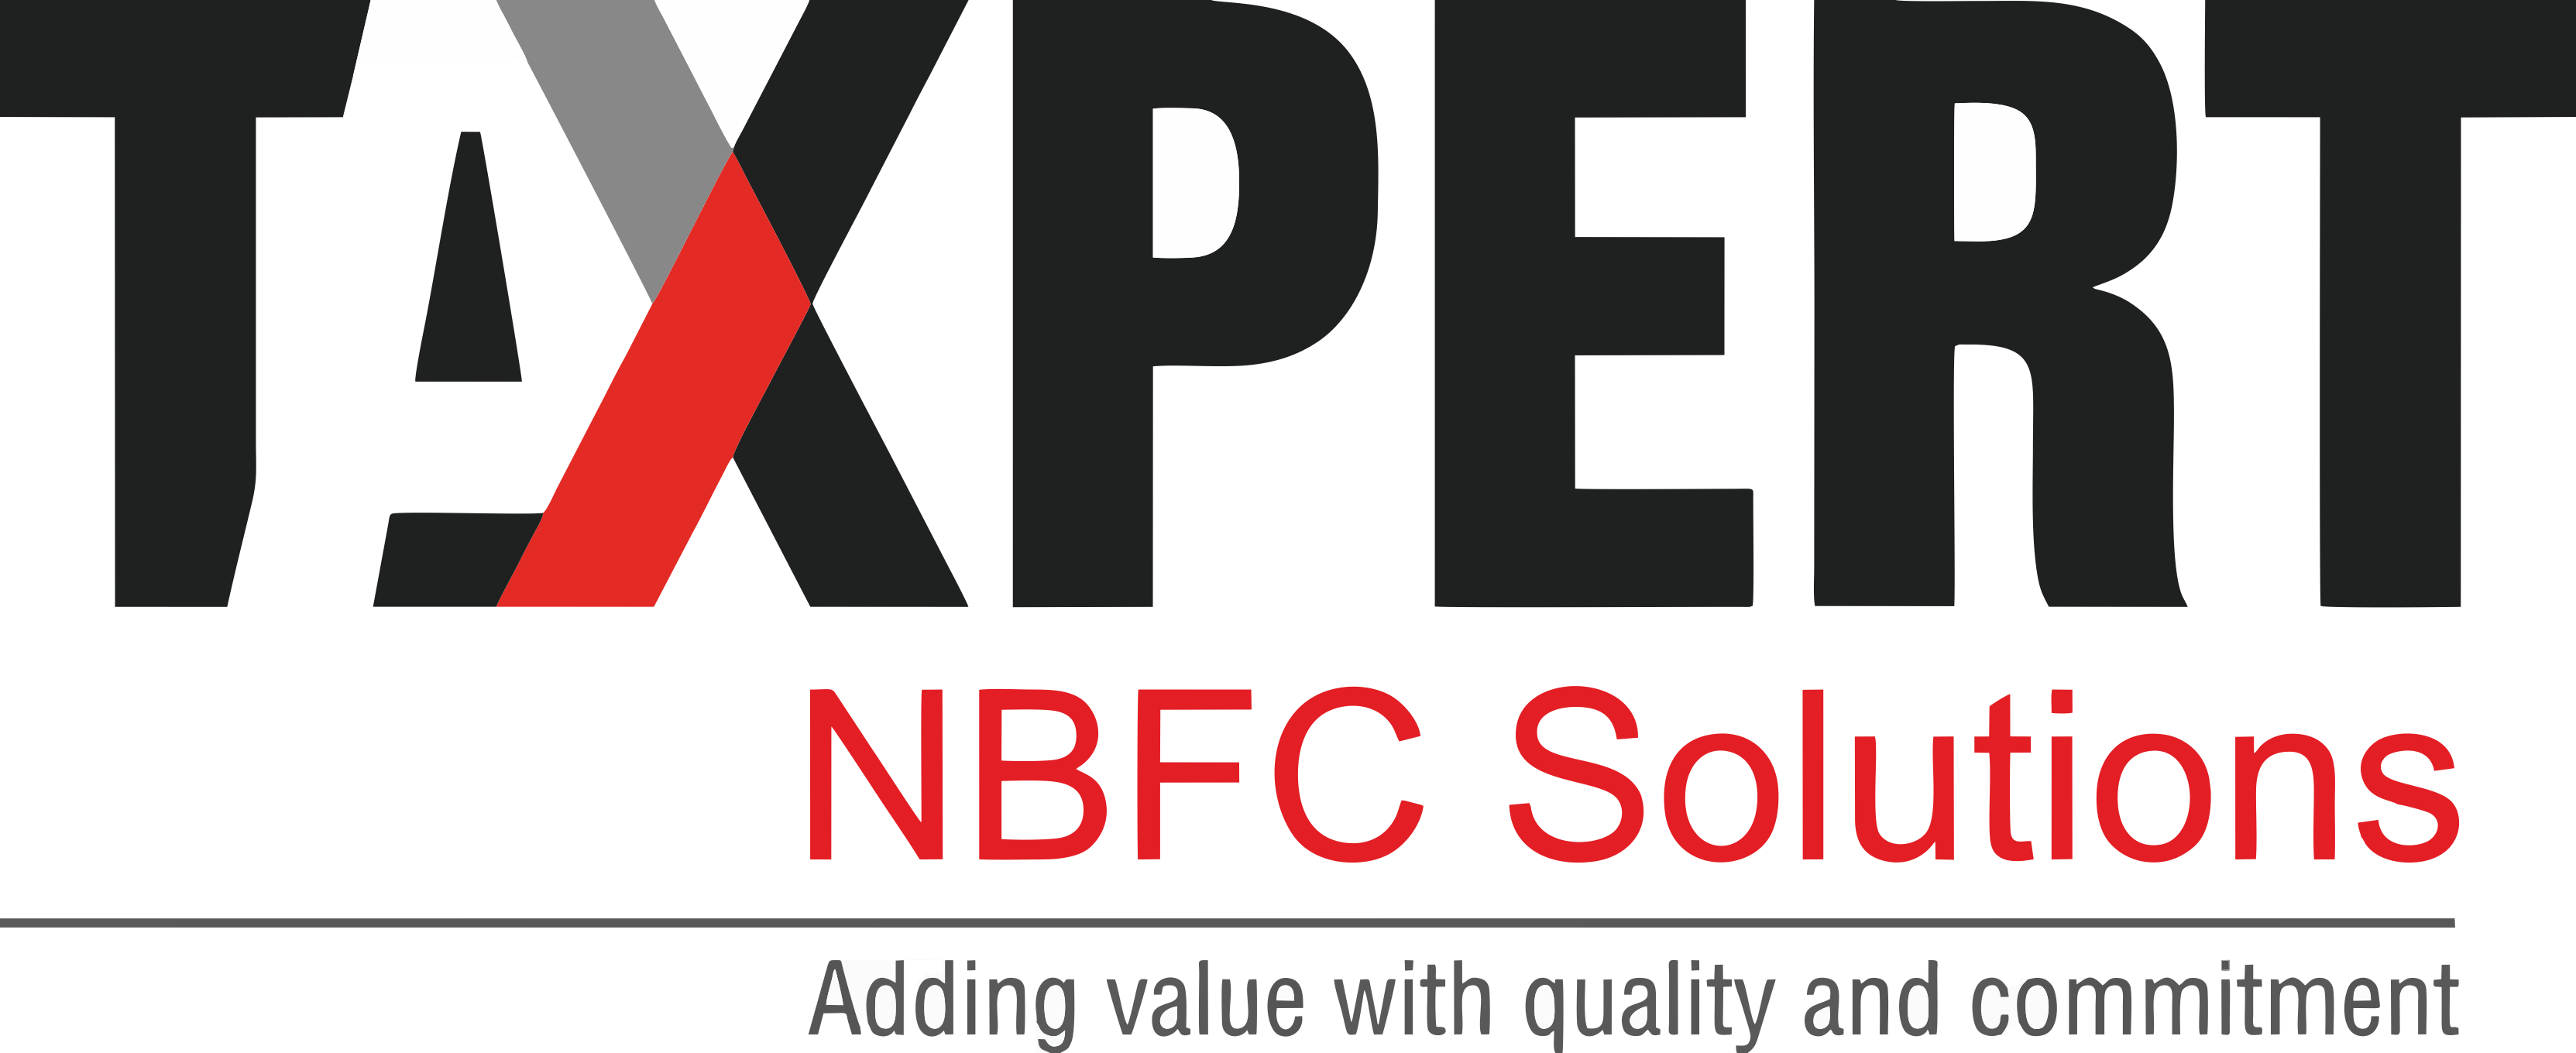 Taxpert NBFC Solutions